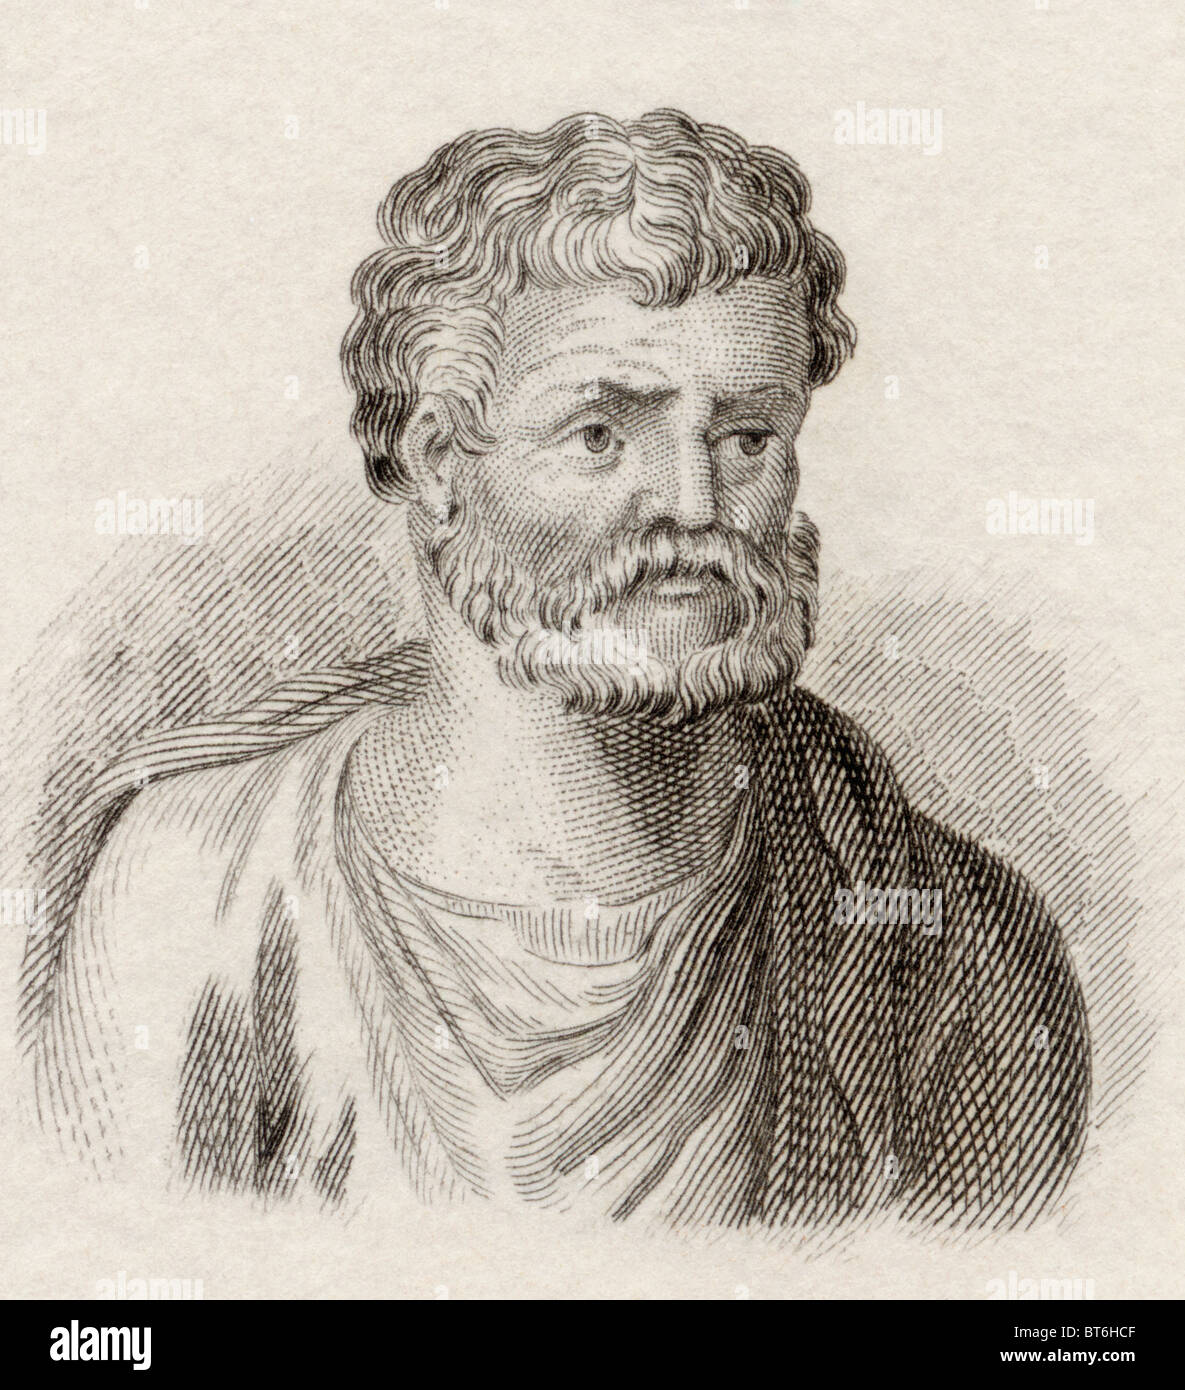 Marcus Mettius Epaphroditus of Chaeroneia. Ancient Greek grammarian of the first century. Stock Photo